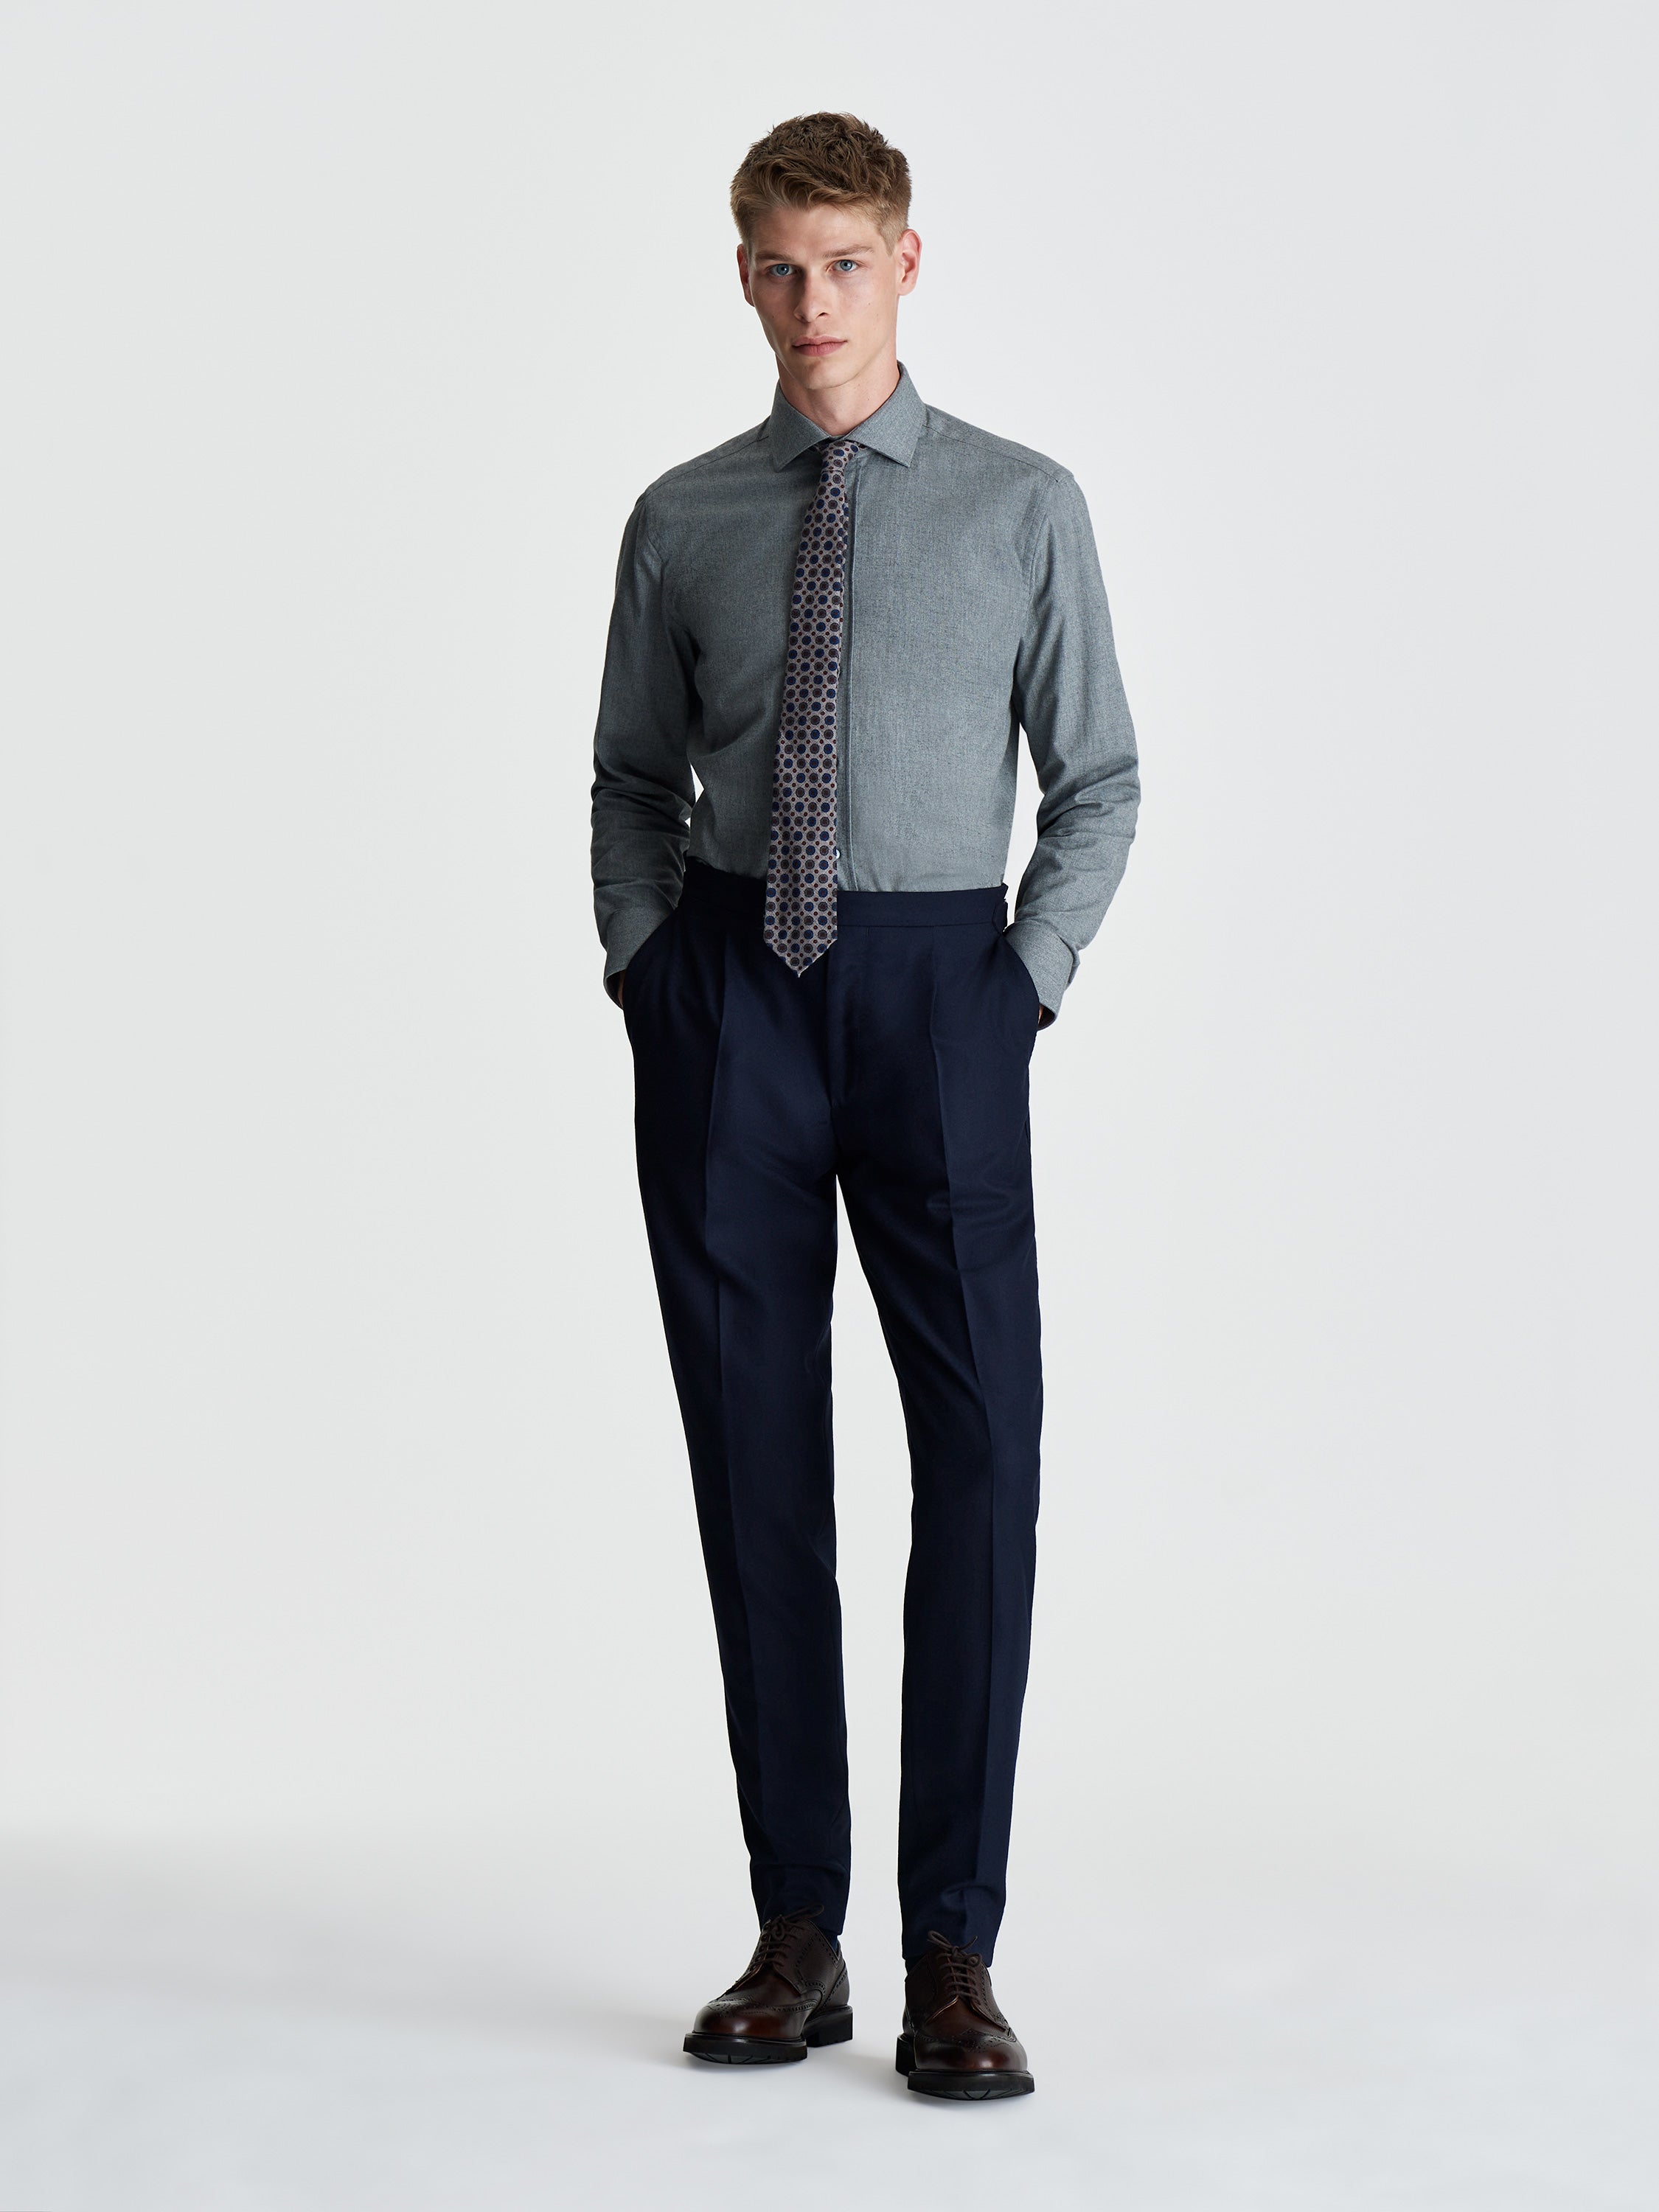 Flannel Cutaway Collar Shirt Slate Grey Full Length Model Image